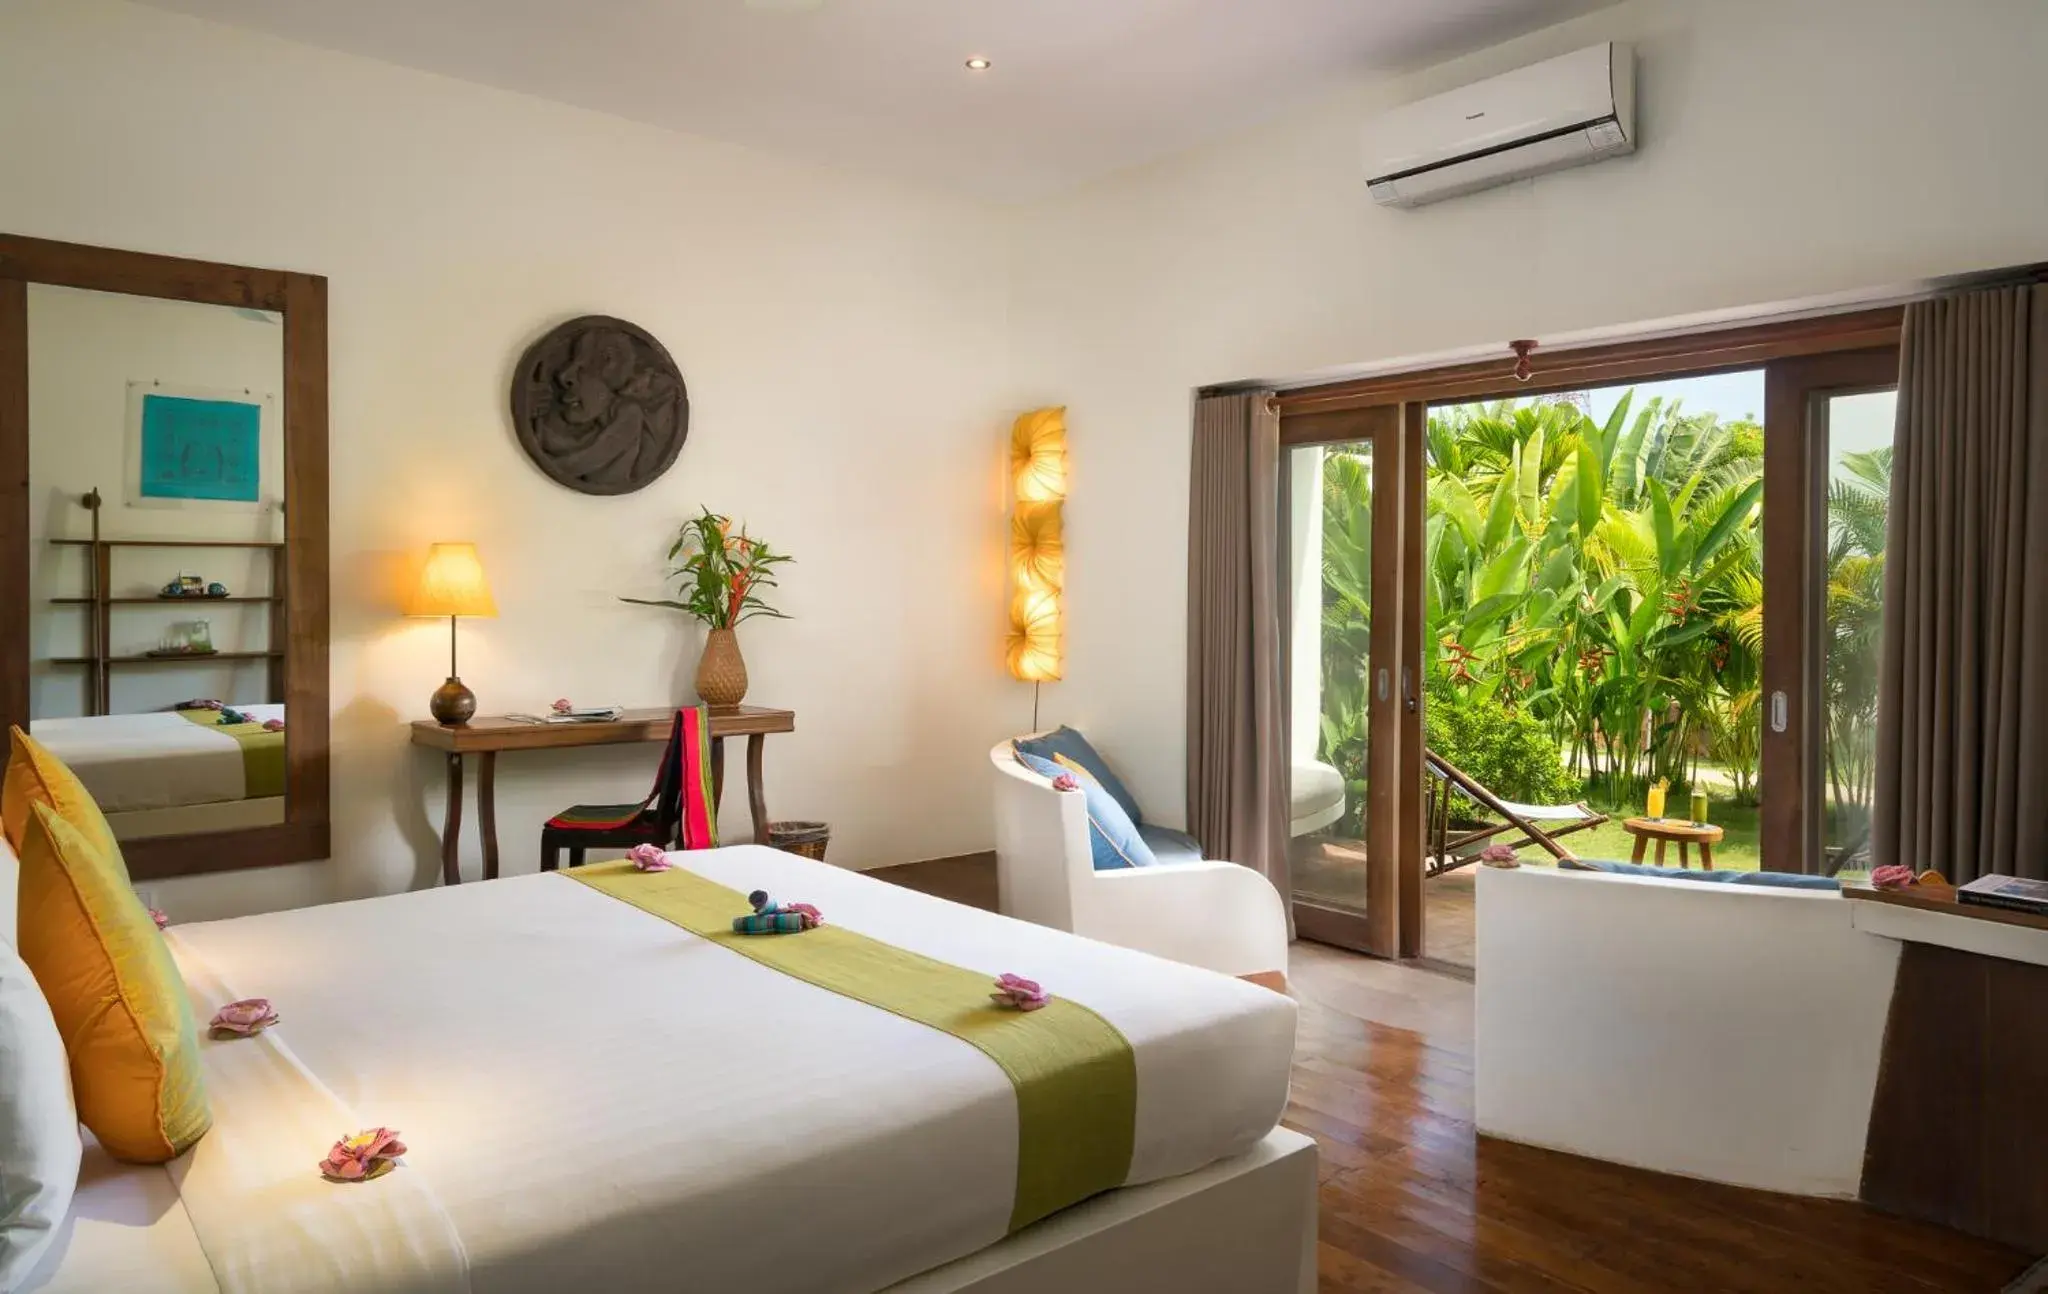 Bedroom in Navutu Dreams Resort & Wellness Retreat